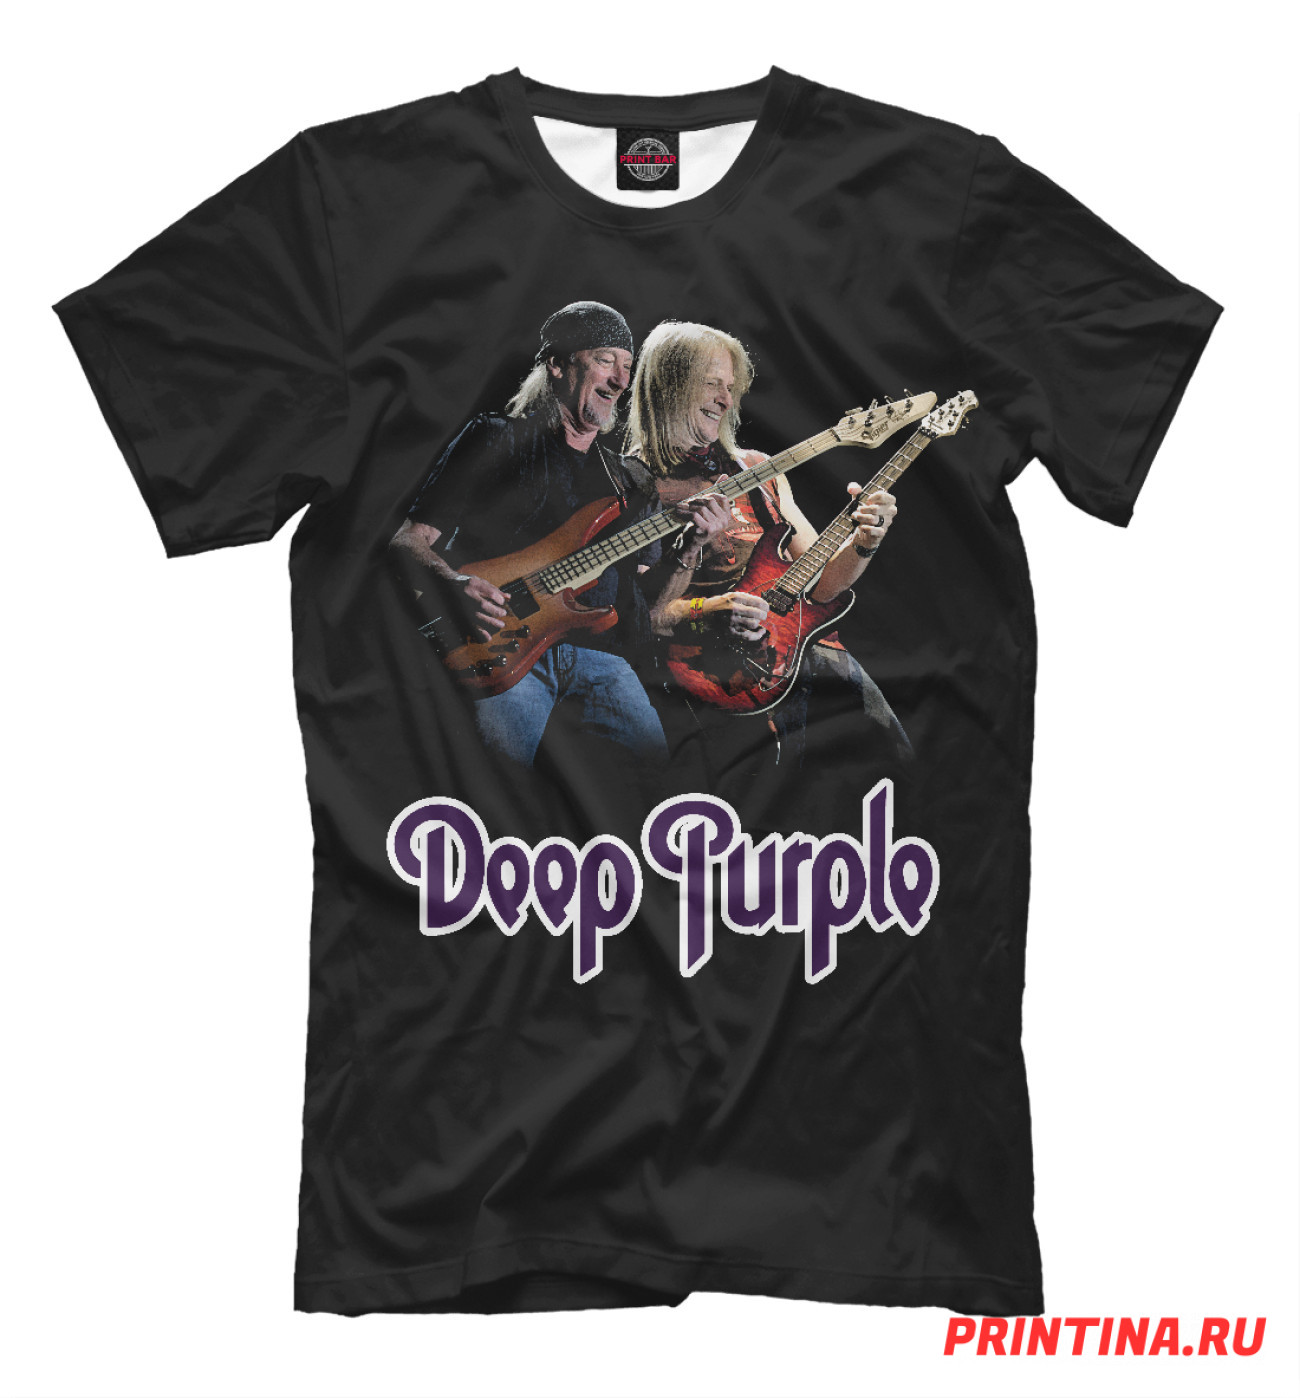 Мужская Футболка Deep Purple, артикул: PUR-869618-fut-2